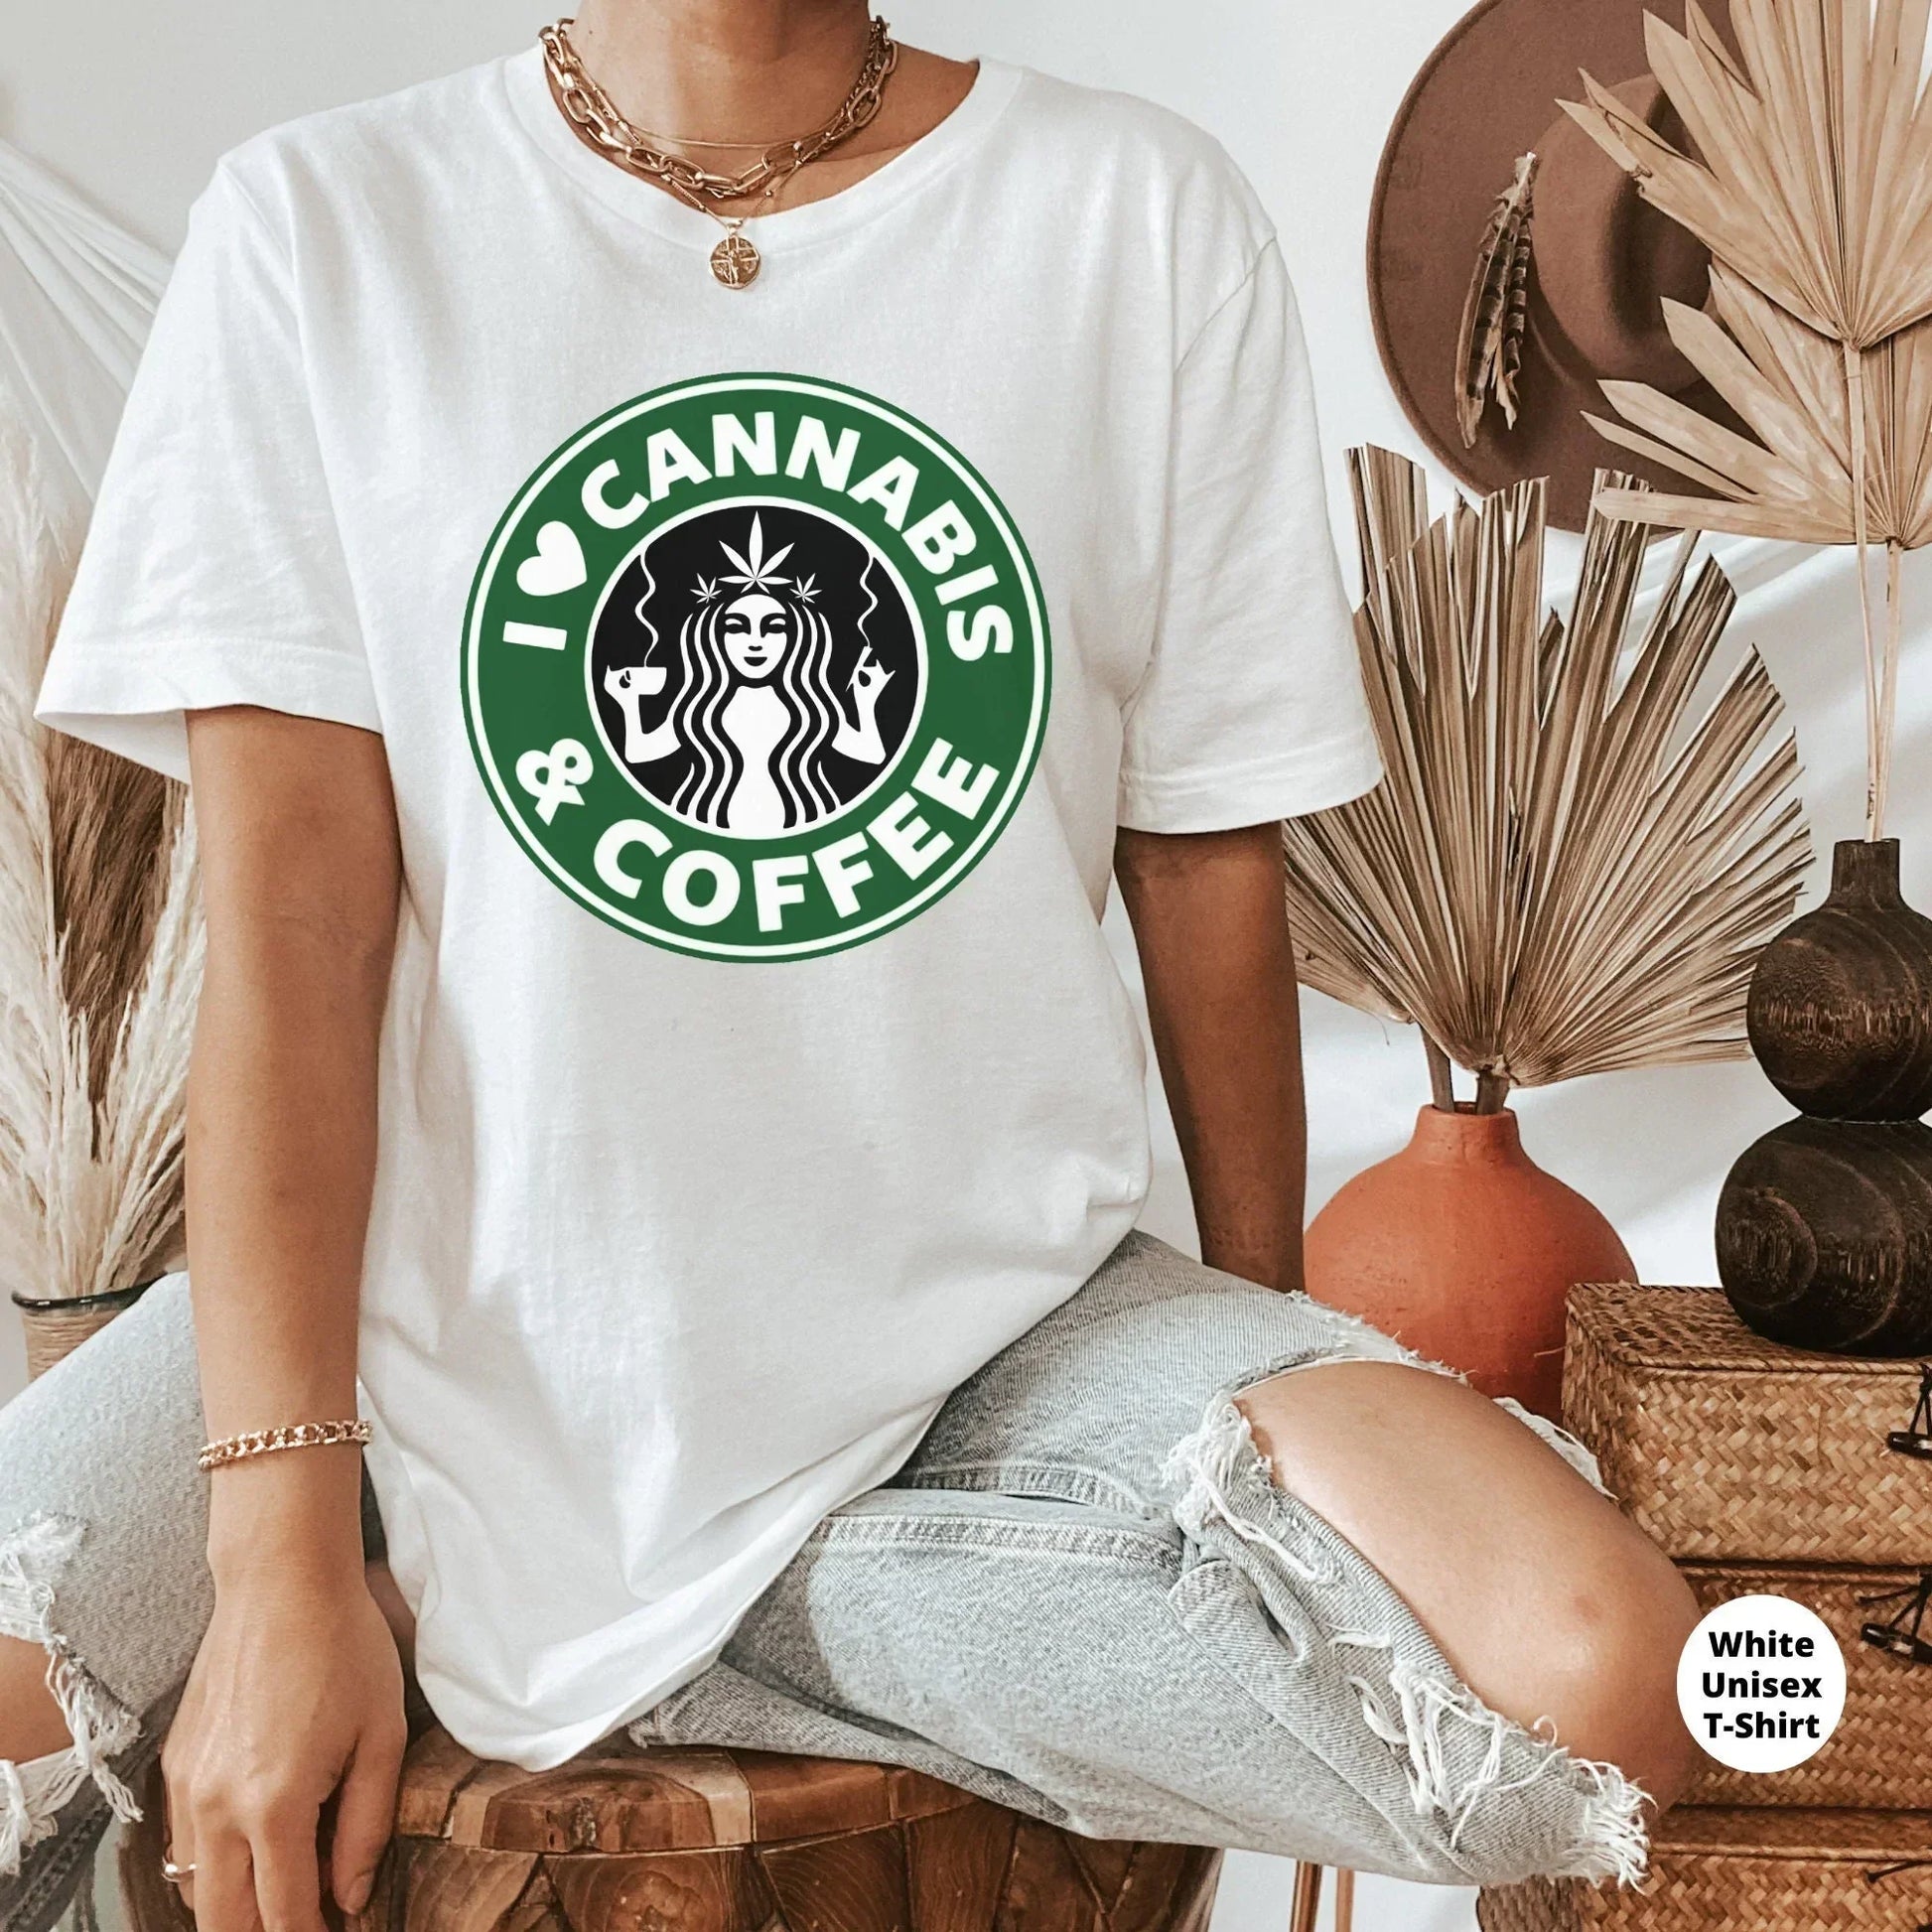 I Love Cannabis and Coffee Lovers Shirt HMDesignStudioUS